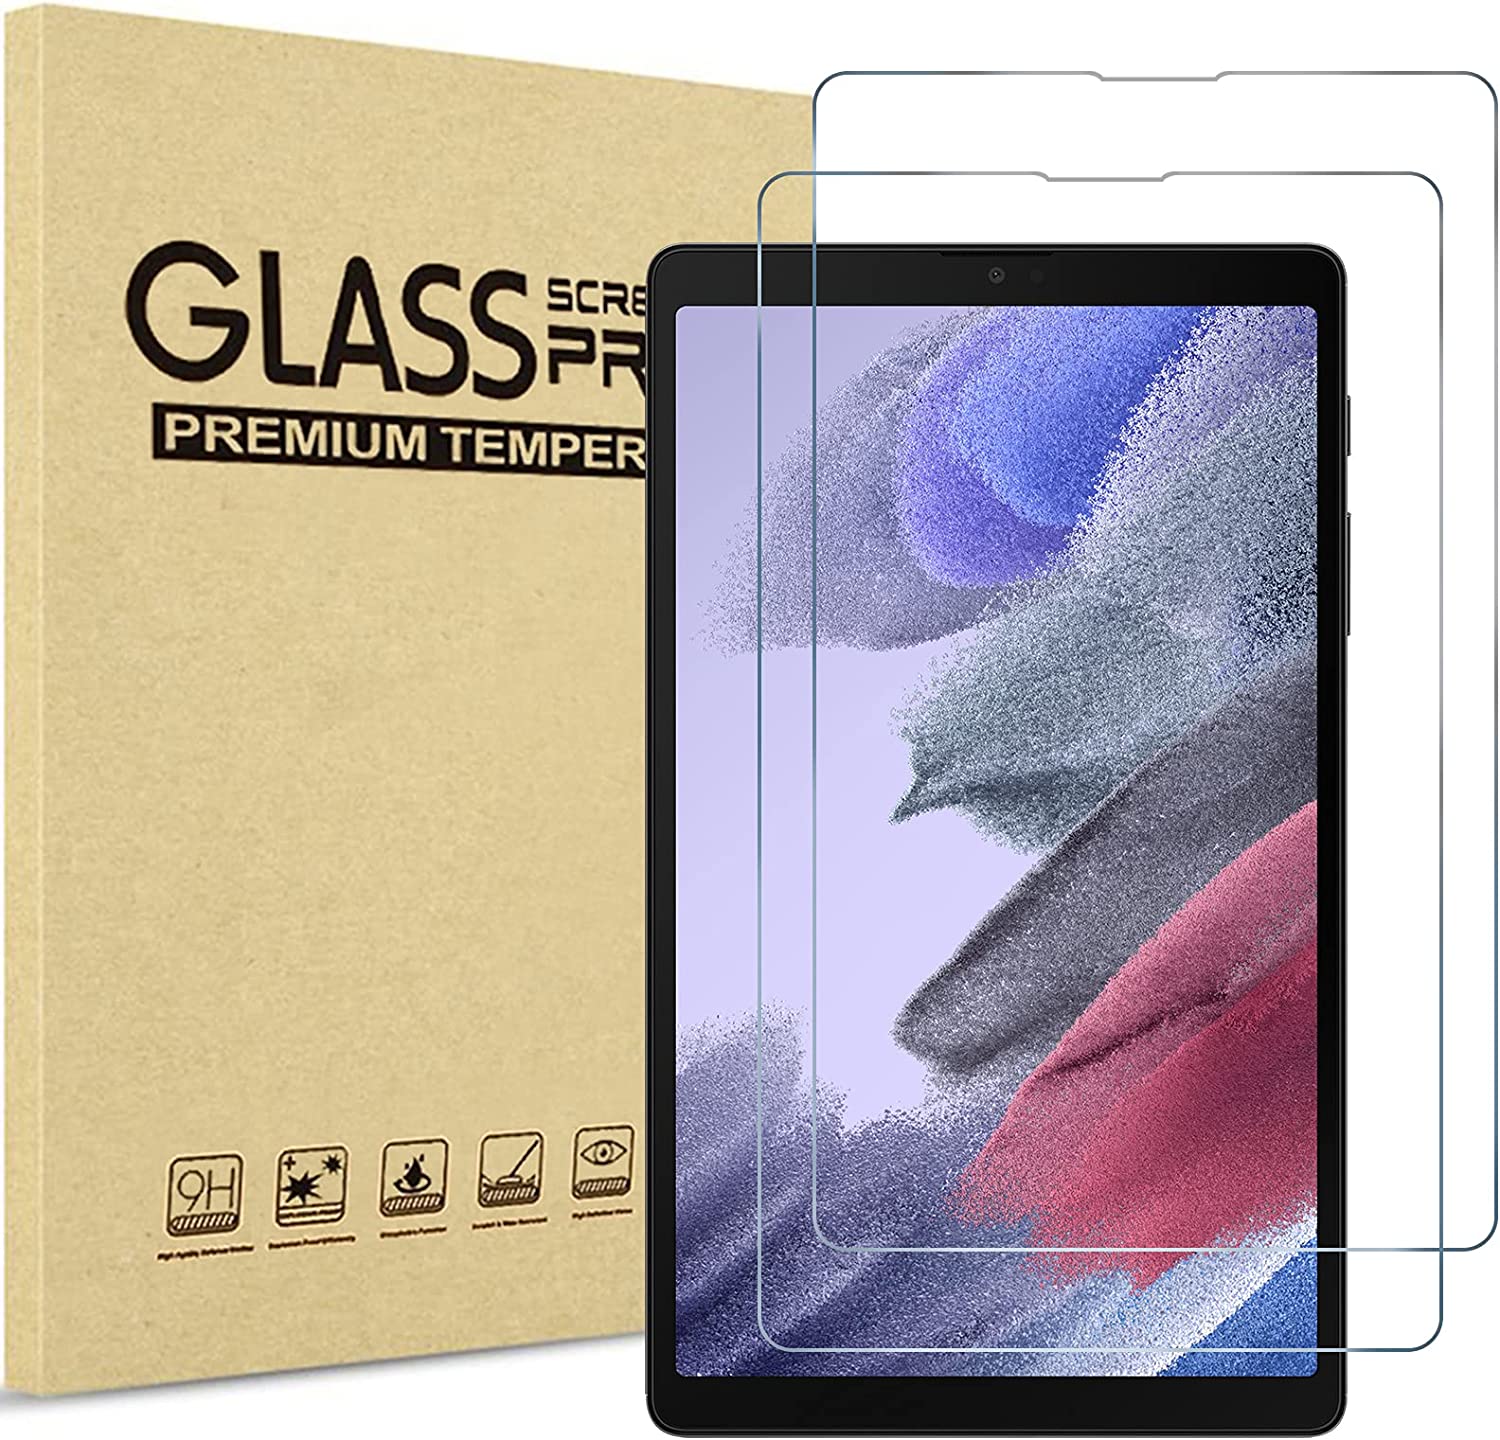 Procase Protector para Galaxy Tab A7 Lite 8.7 2021 SM-T220 SM-T225 SM-T227, Mica Cristal Vidrio Templado de Pantalla para Galaxy Tab A7 Lite 8.7 Pulgadas 2021 T220 T225 T227